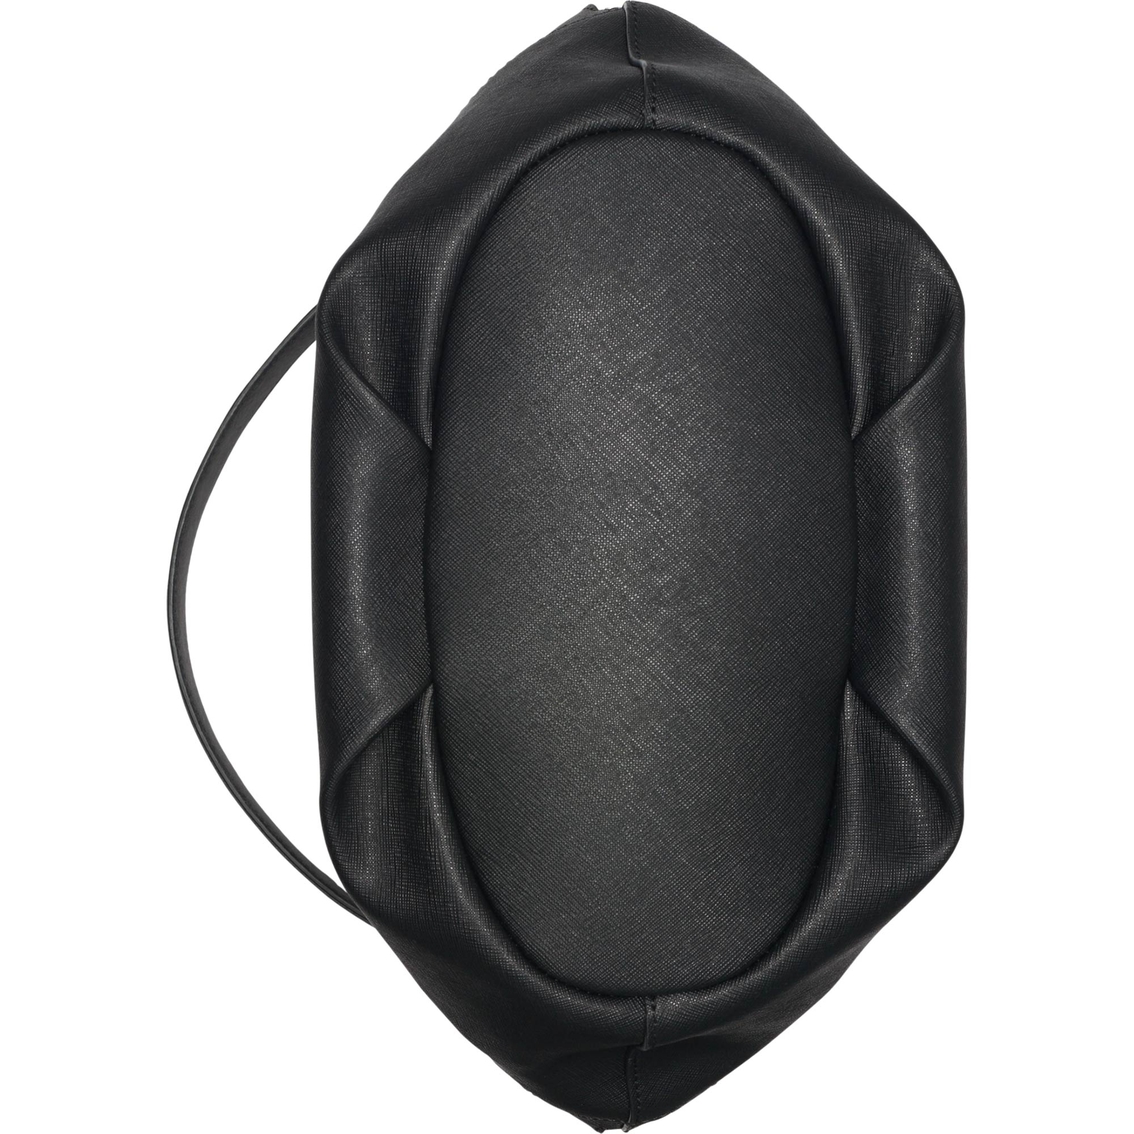 Calvin Klein Saffiano Leather Mercy Hobo Handbag - Image 5 of 6